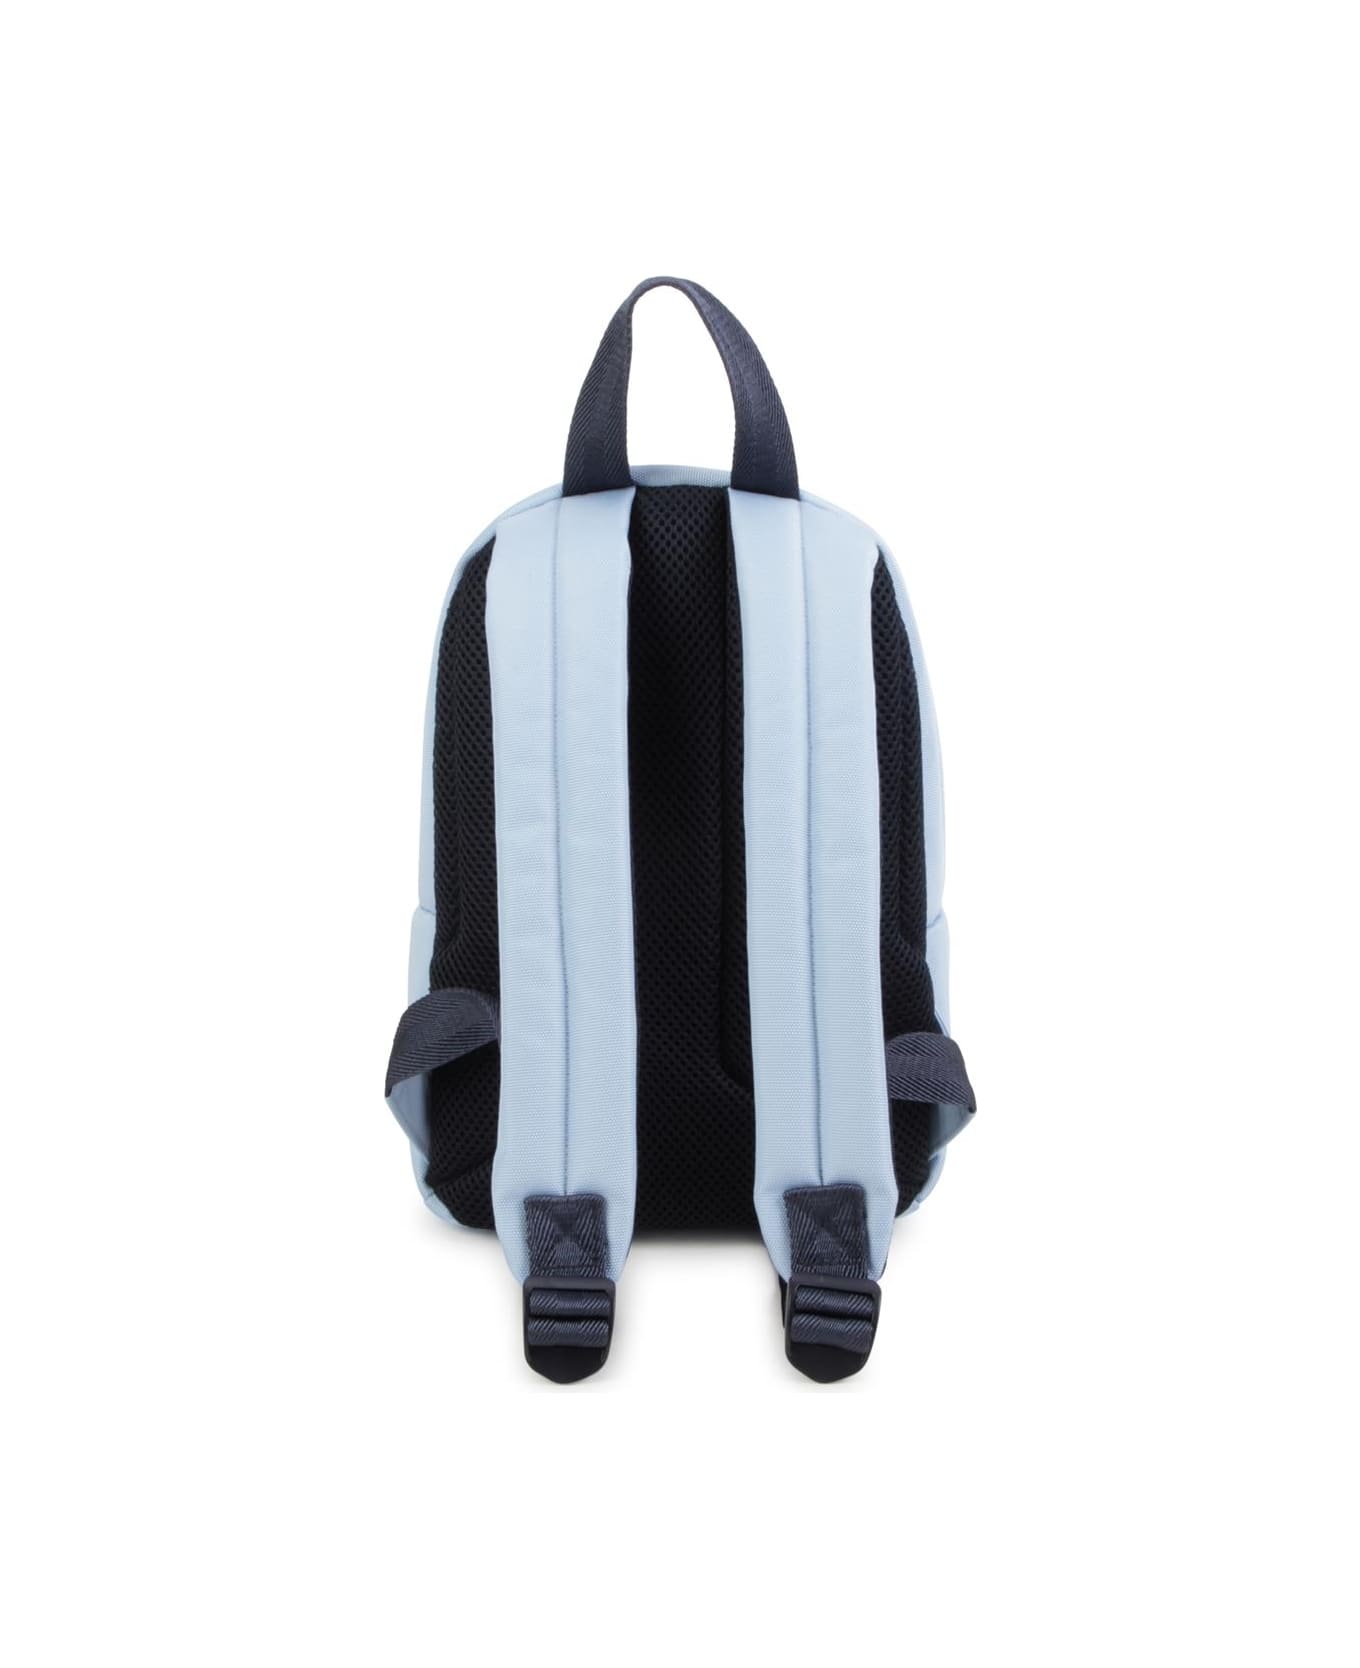 Hugo Boss Backpack With Print - Light blue